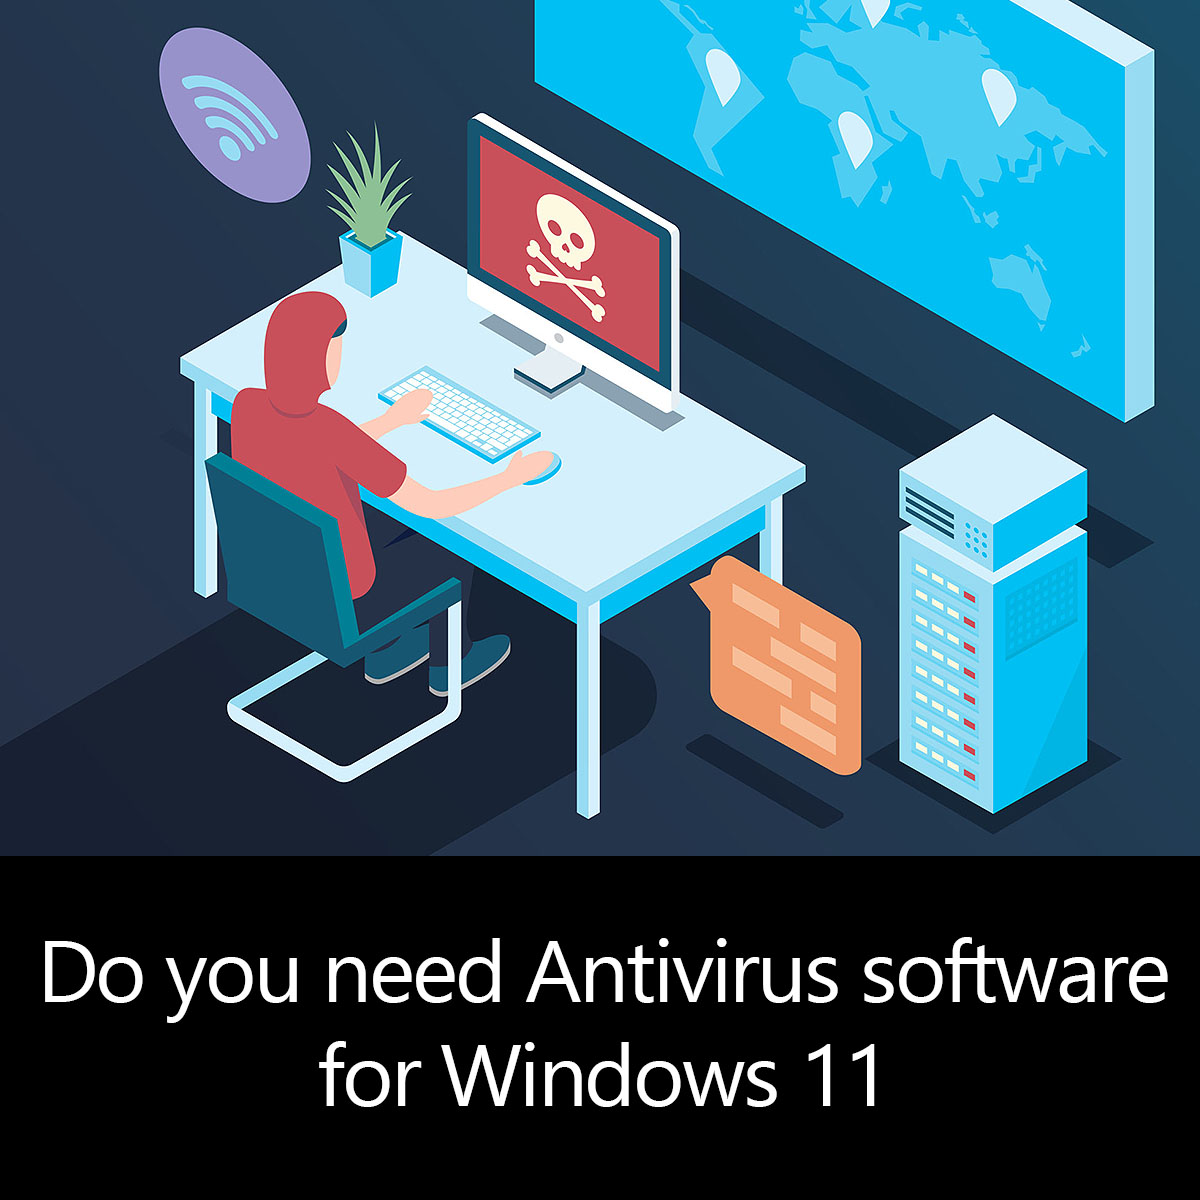 Do you need Antivirus software for Windows 11